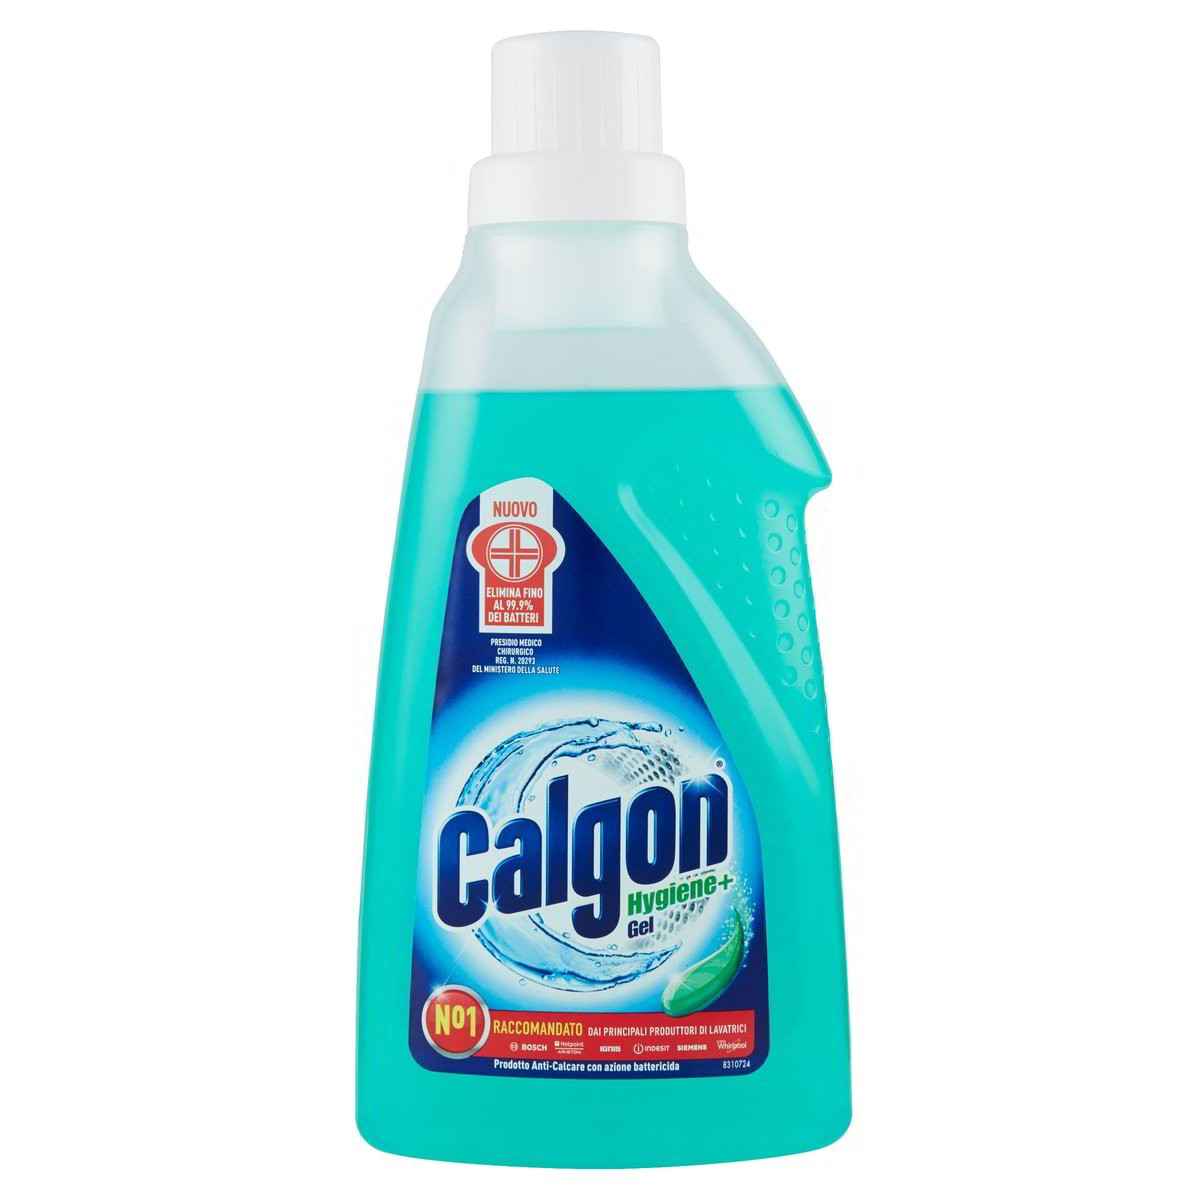 Calgon Anticalcare gel per lavatrice Hygiene+